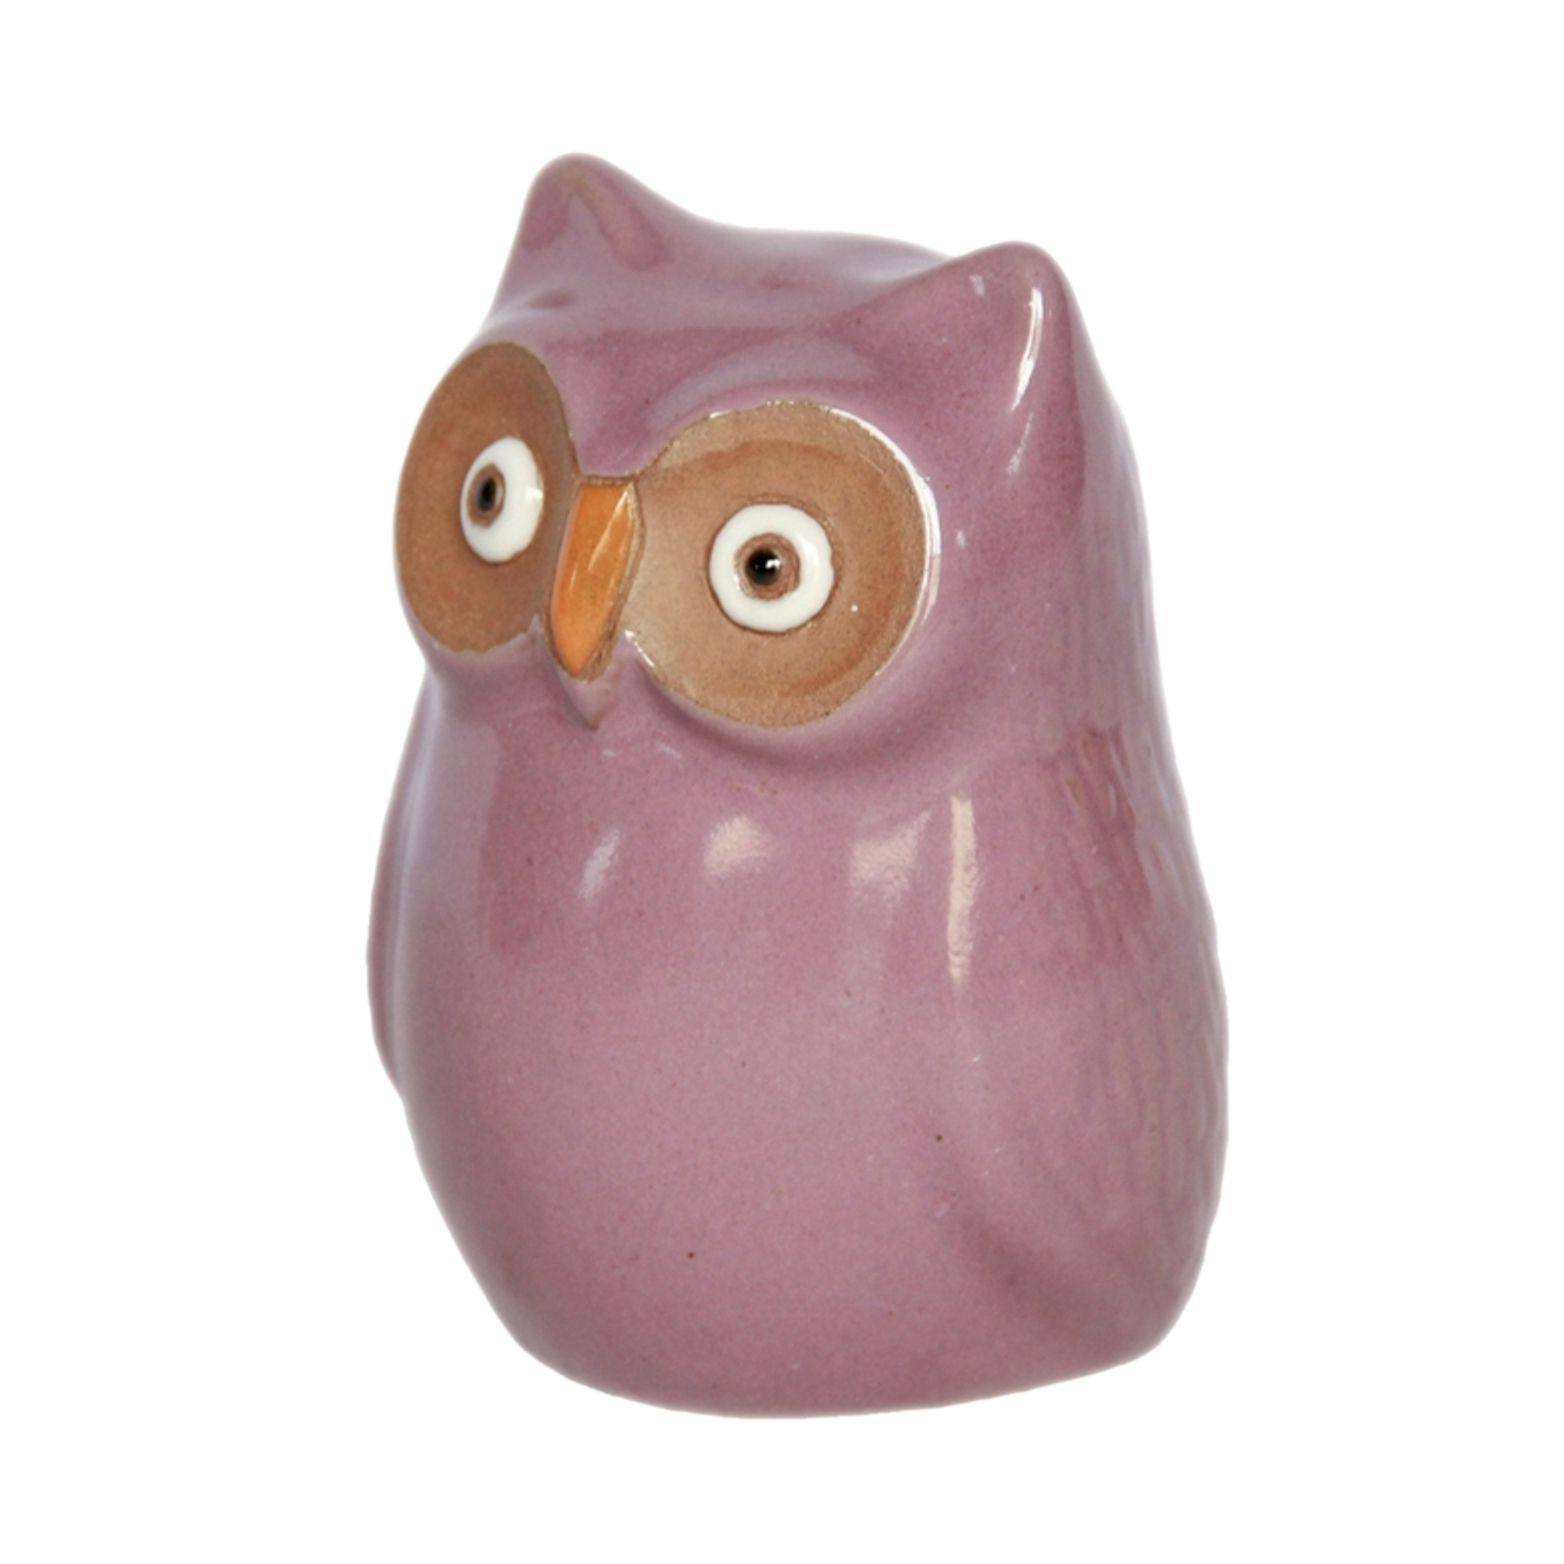 Verve Owl Garden ornament